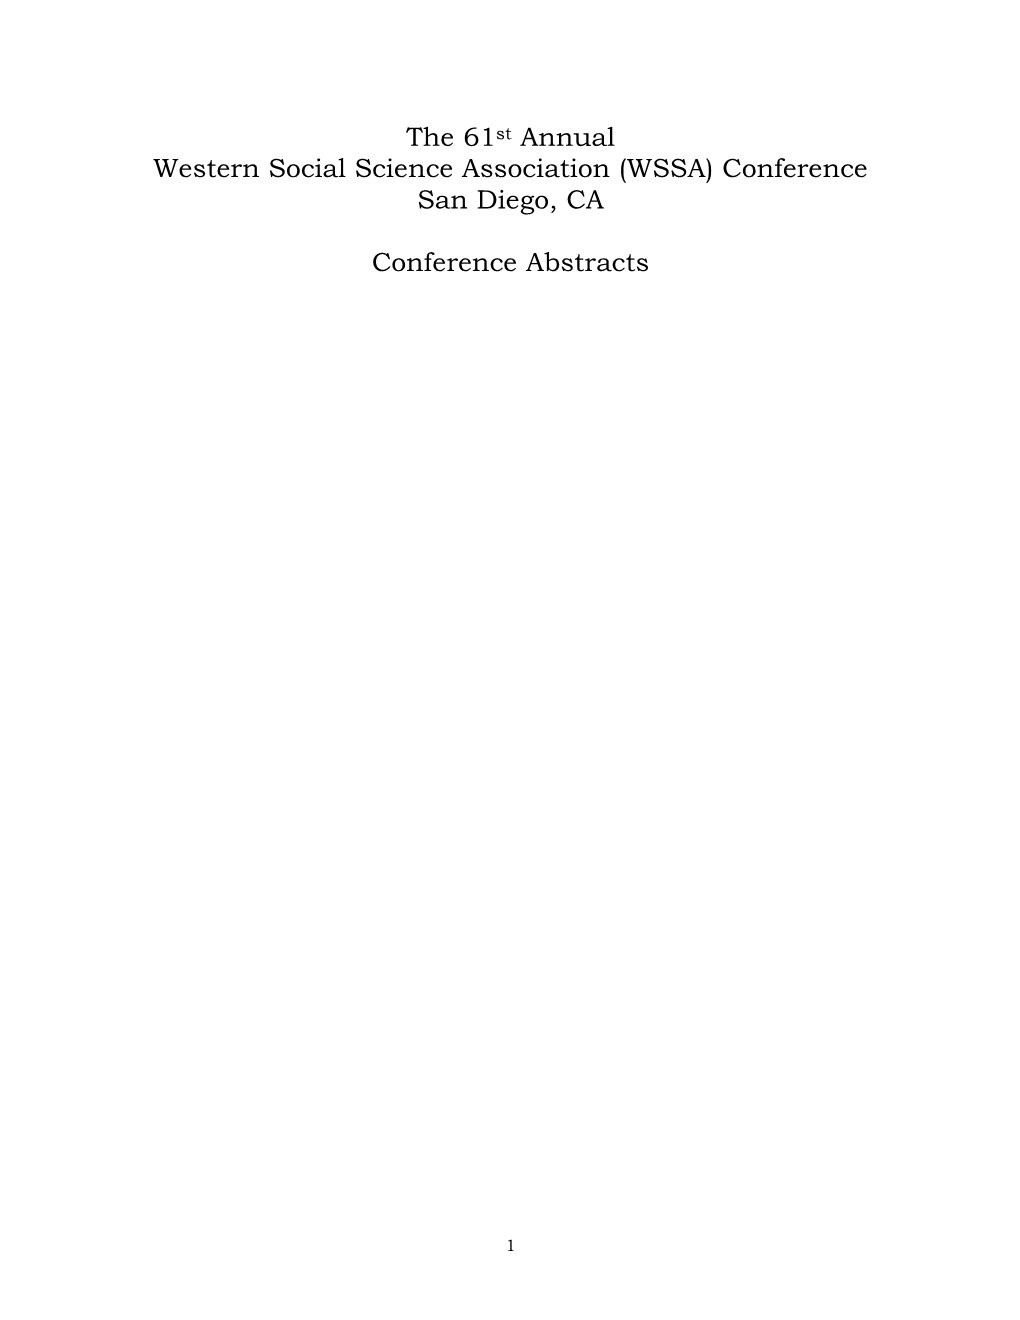 (WSSA) Conference San Diego, CA